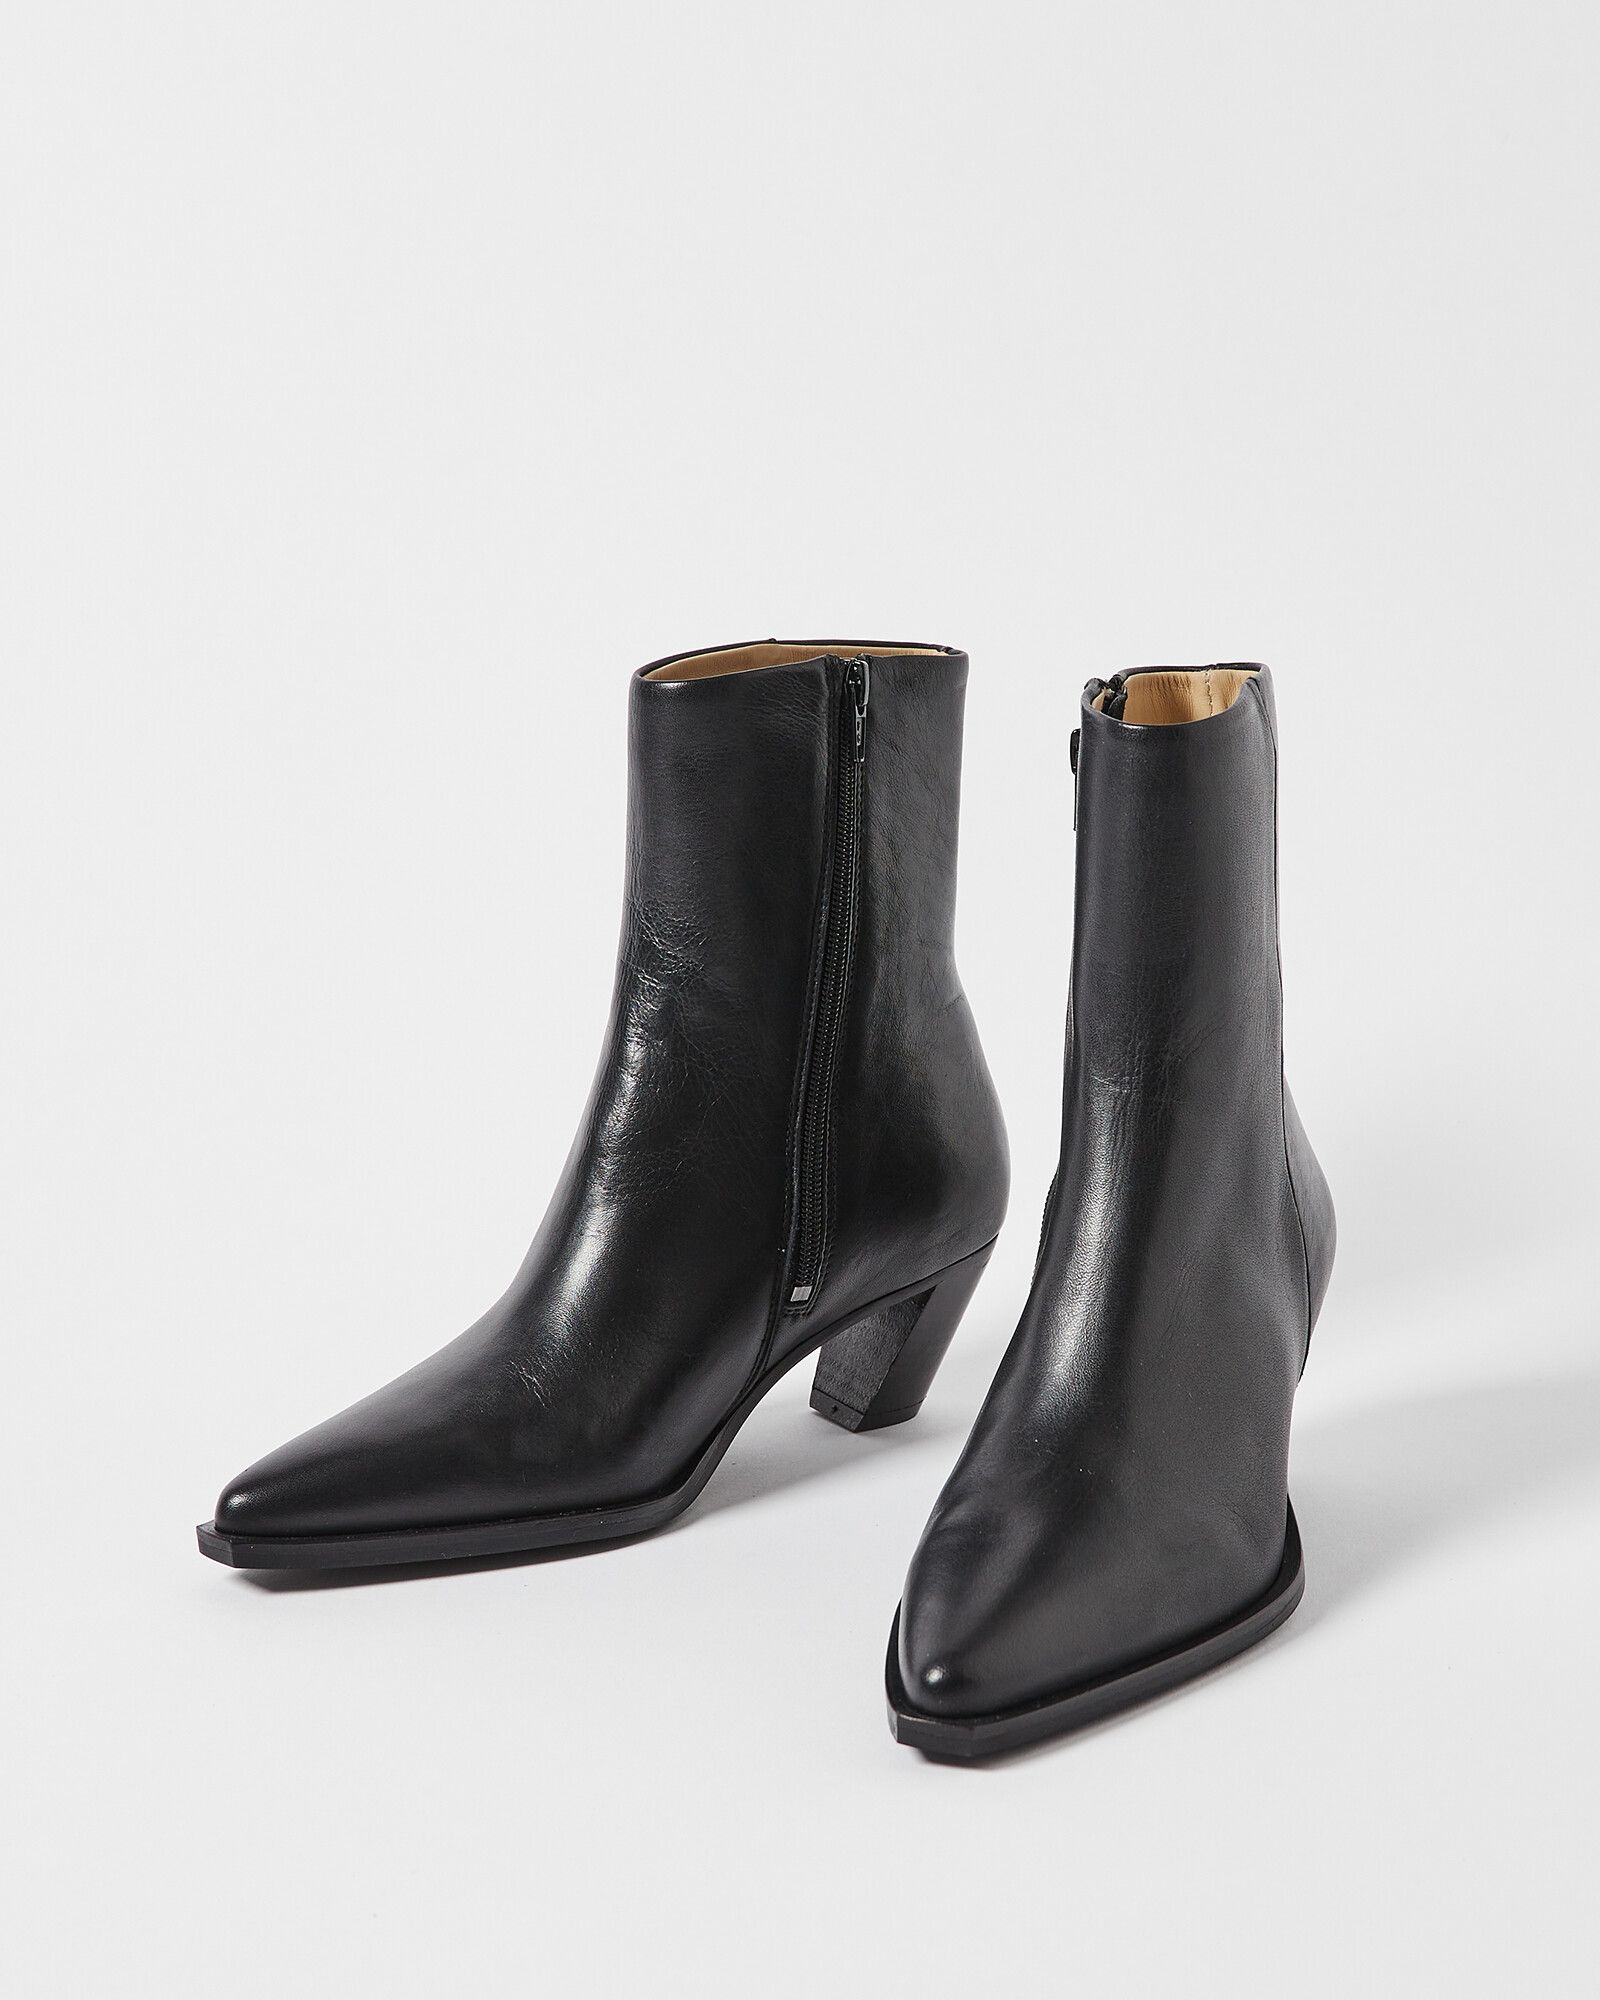 Selected Femme Stella Black Leather Boots | Oliver Bonas